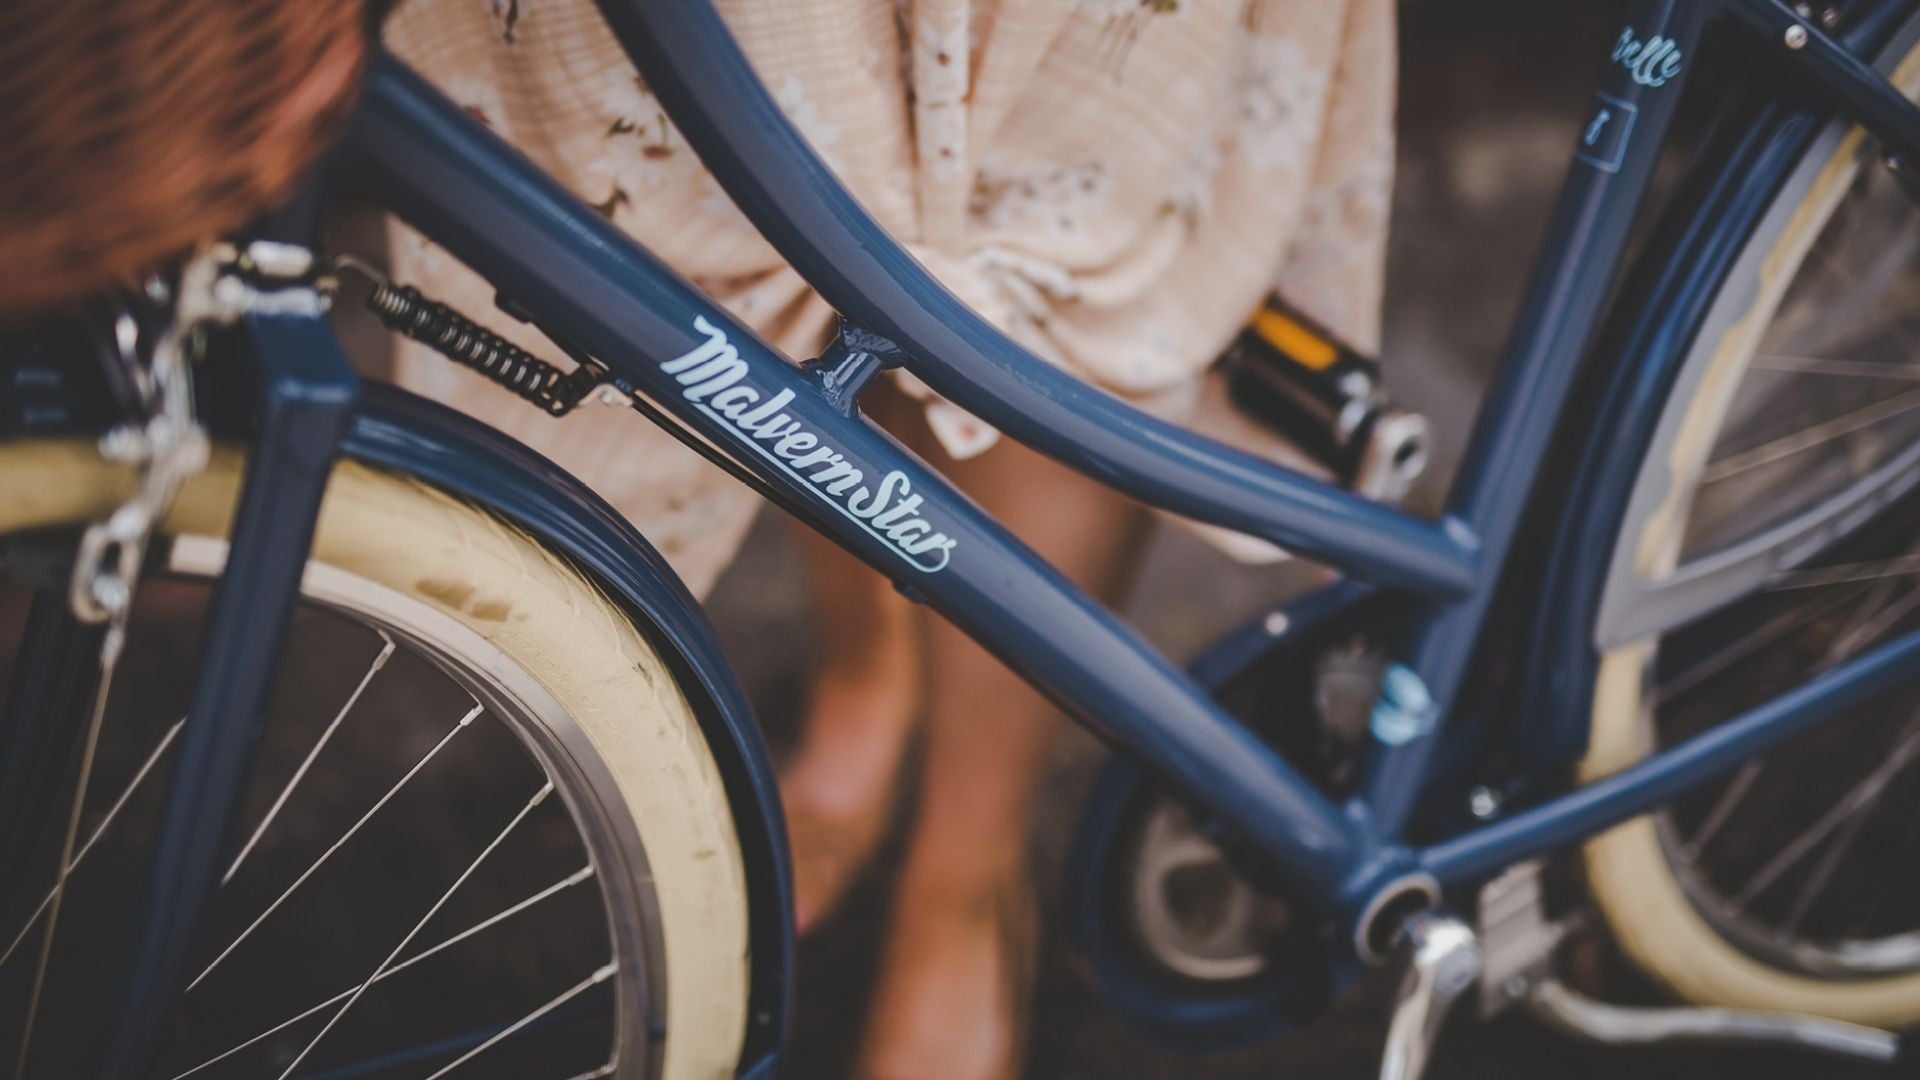 Close up of a blue Malvern Star bike